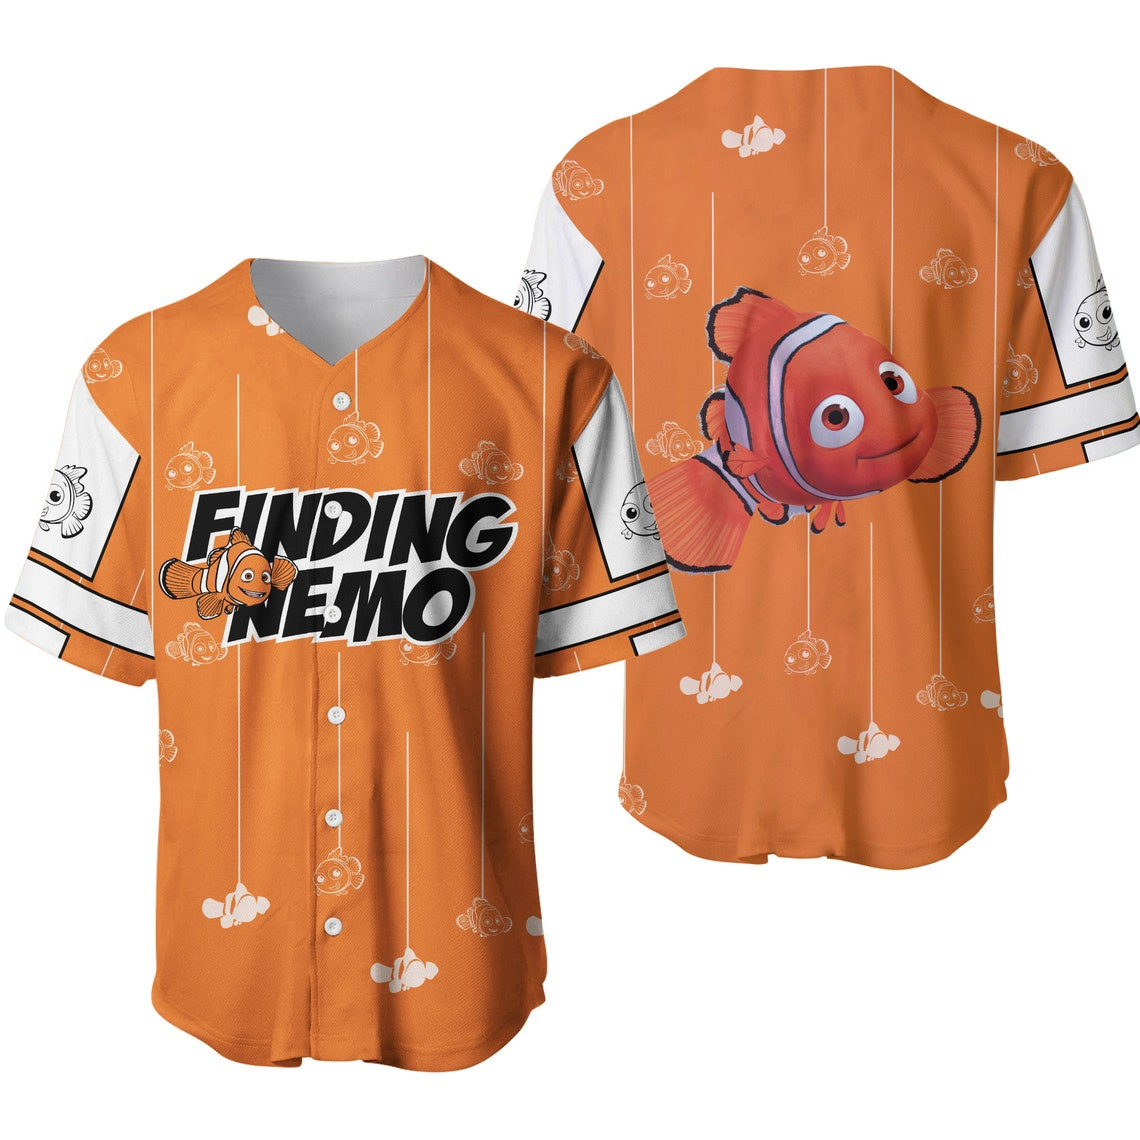 Finding Nemo Orange Black White Stripes Patterns Disney Unisex Cartoon Casual Outfits Custom Baseball Jersey Personalized Shirt Men Women